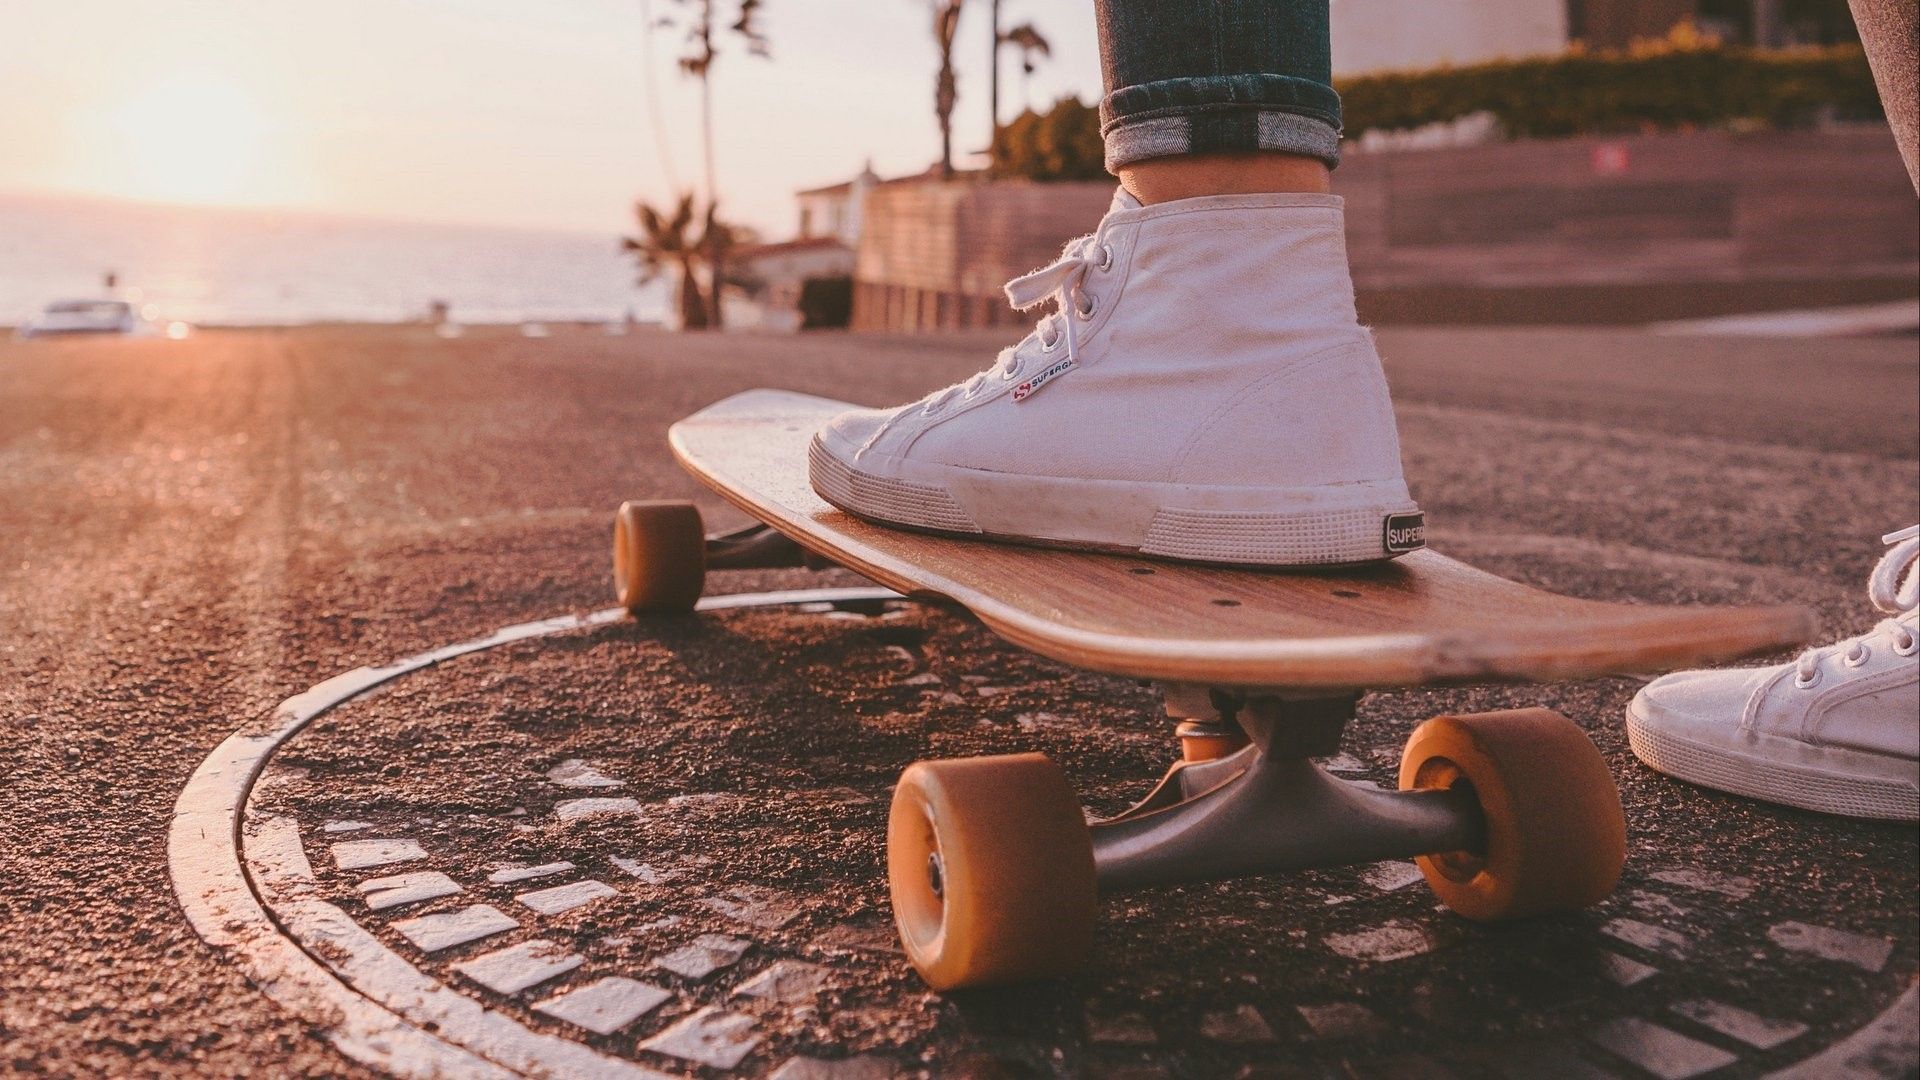 Skateboard Wallpaper On